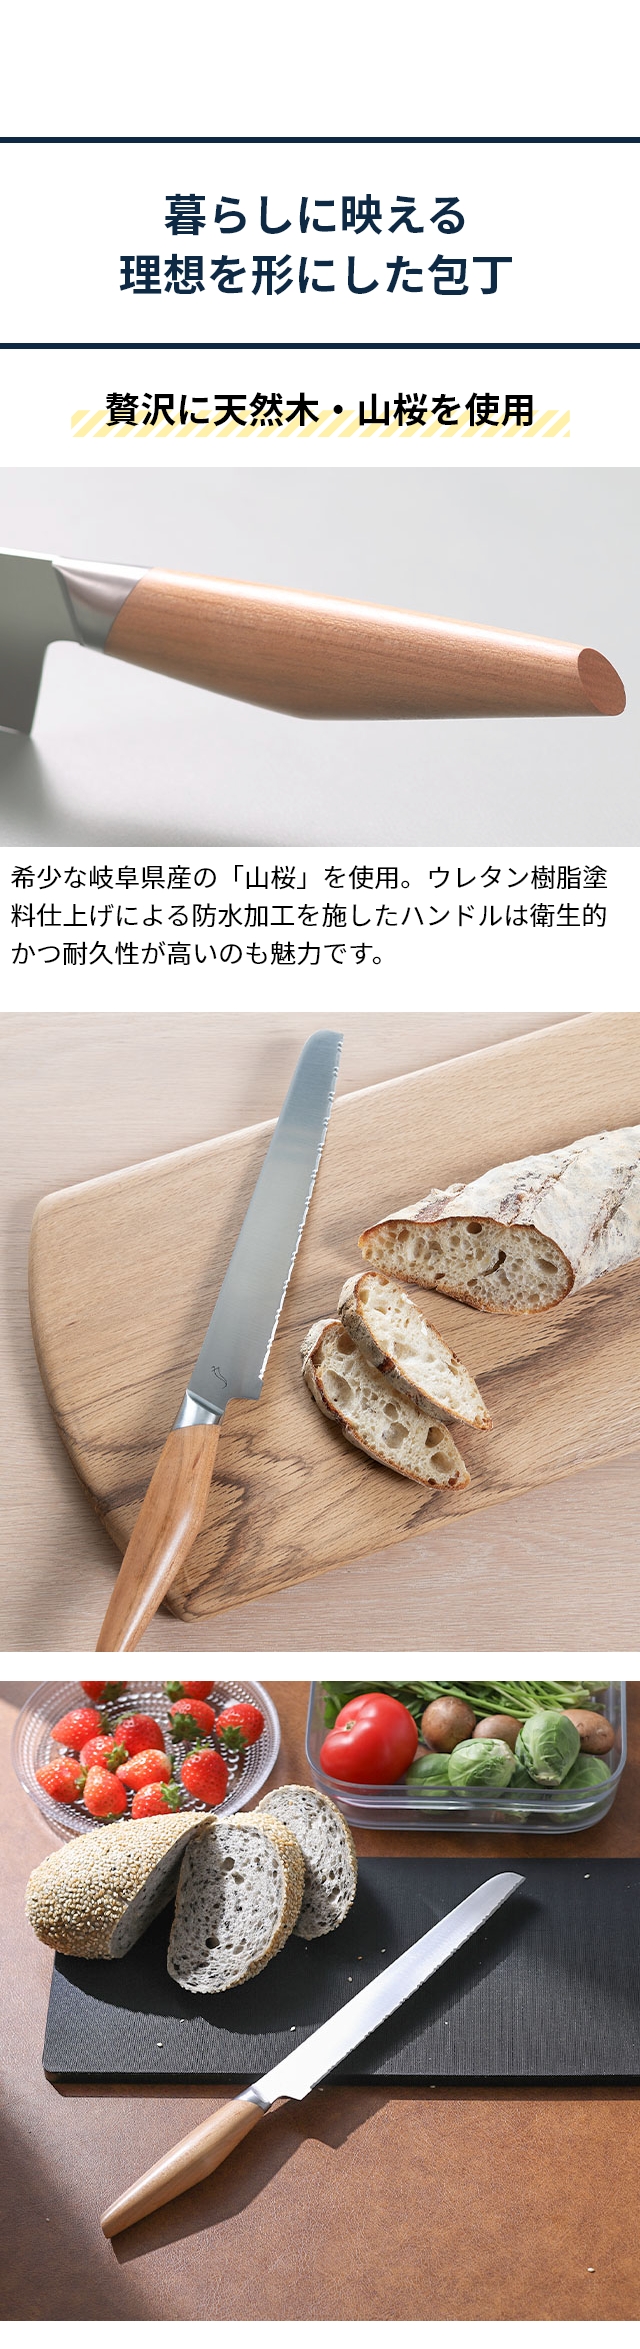 kasane (カサネ) パン切り包丁